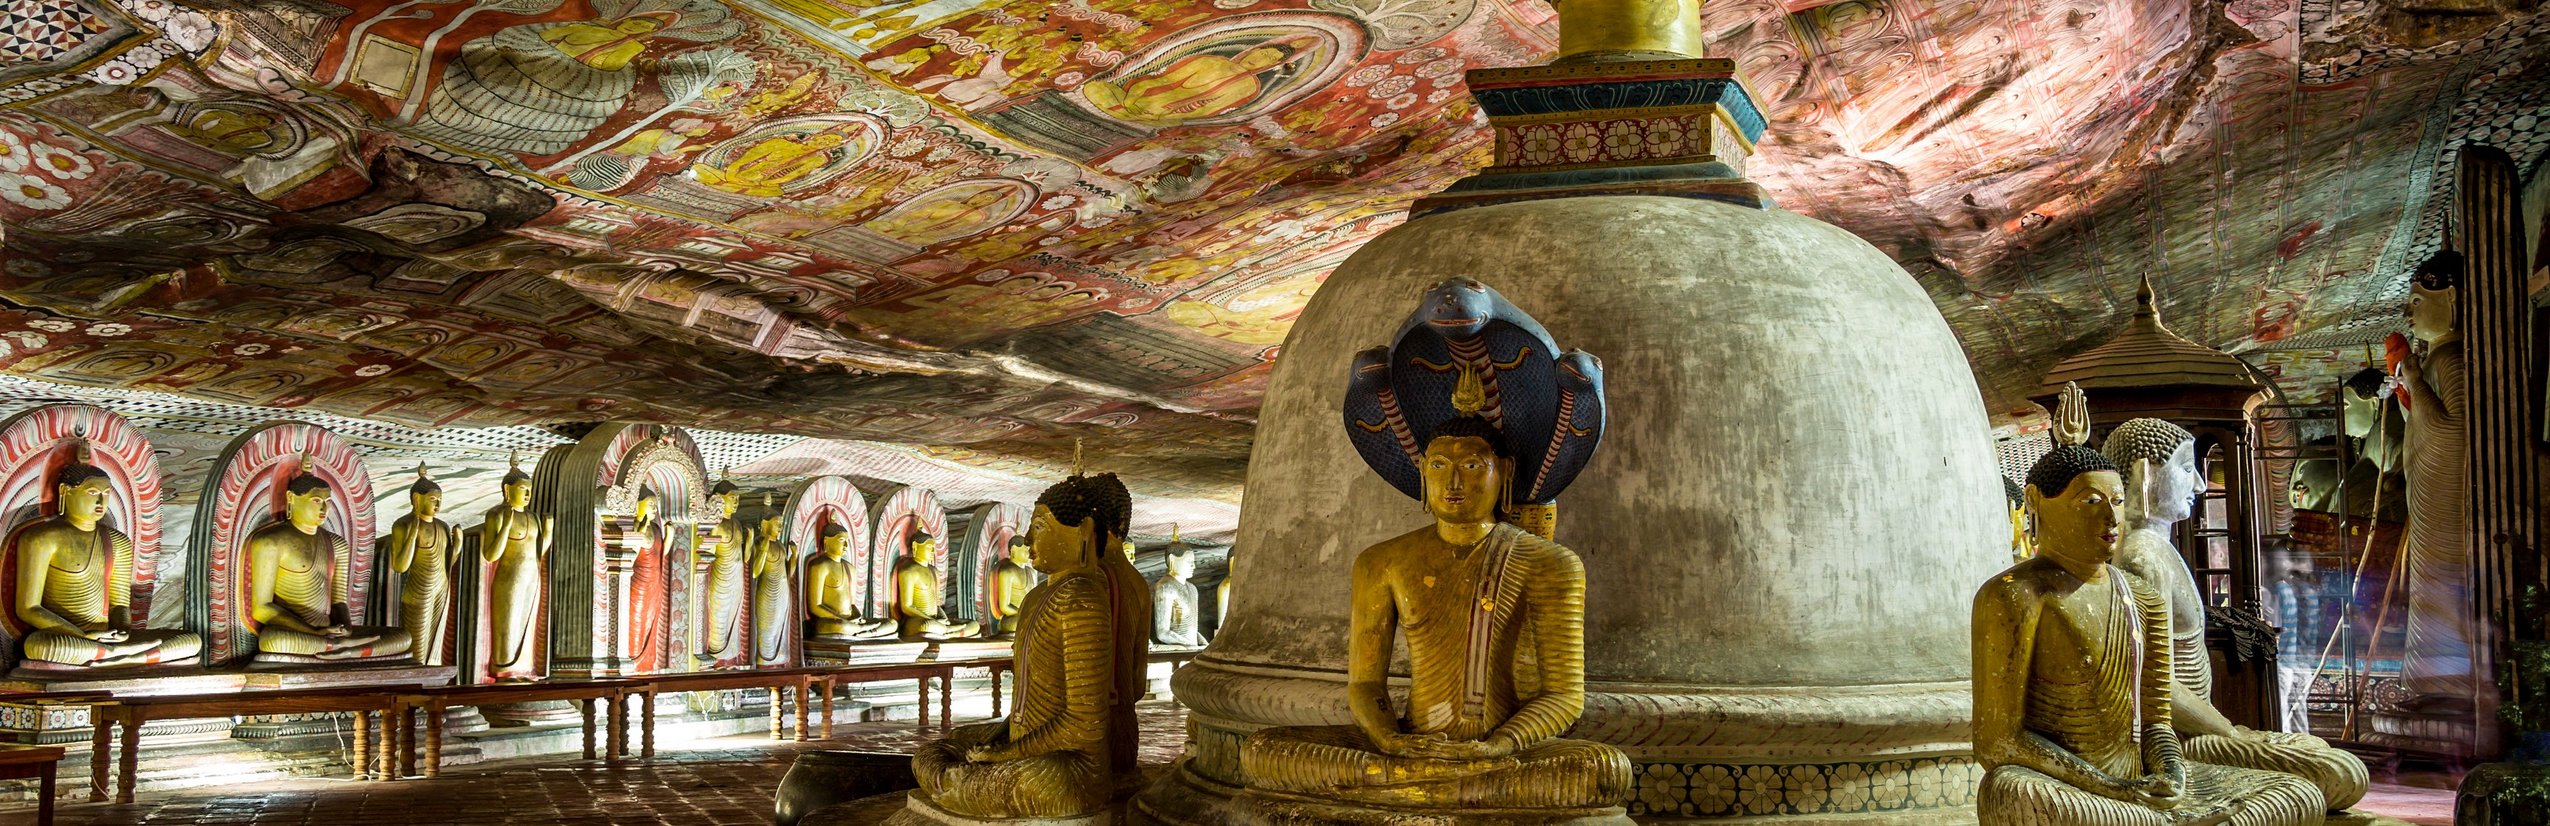 Sri Lanka Familienreise - Sri Lanka for family - Foto von Dambulla Rock Cave Tempel